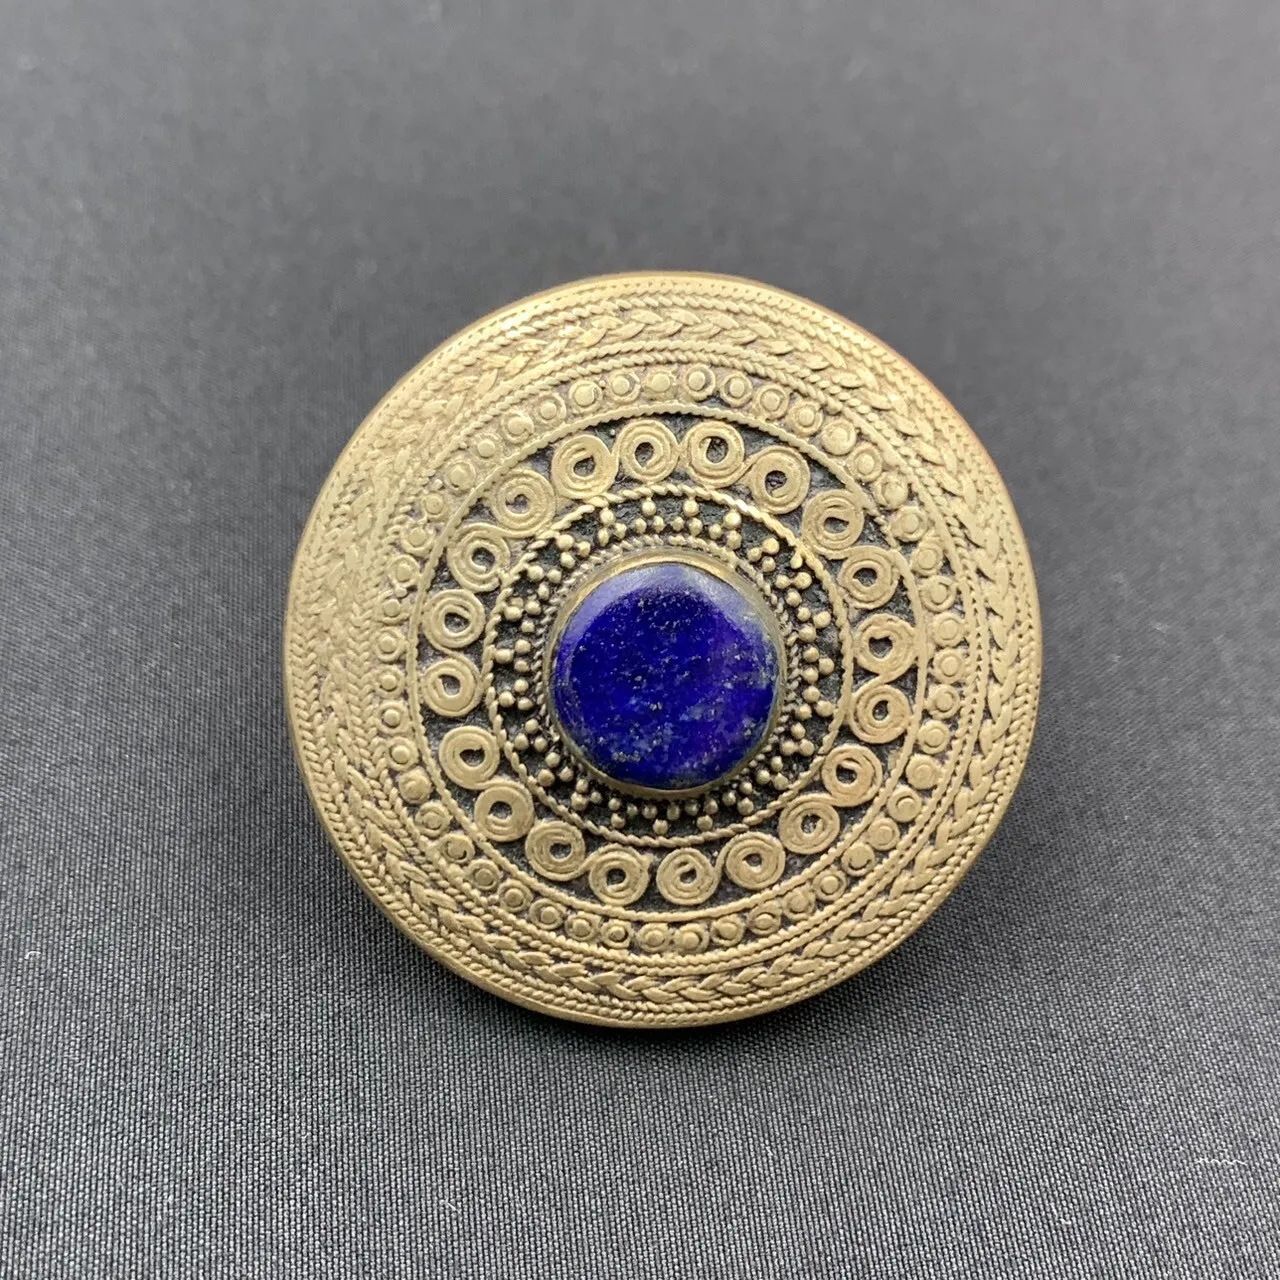 Stunning Vintage Handmade Old Natural Lapis Lazuli with Brass Ring. OJ-854 - Image 2 of 6